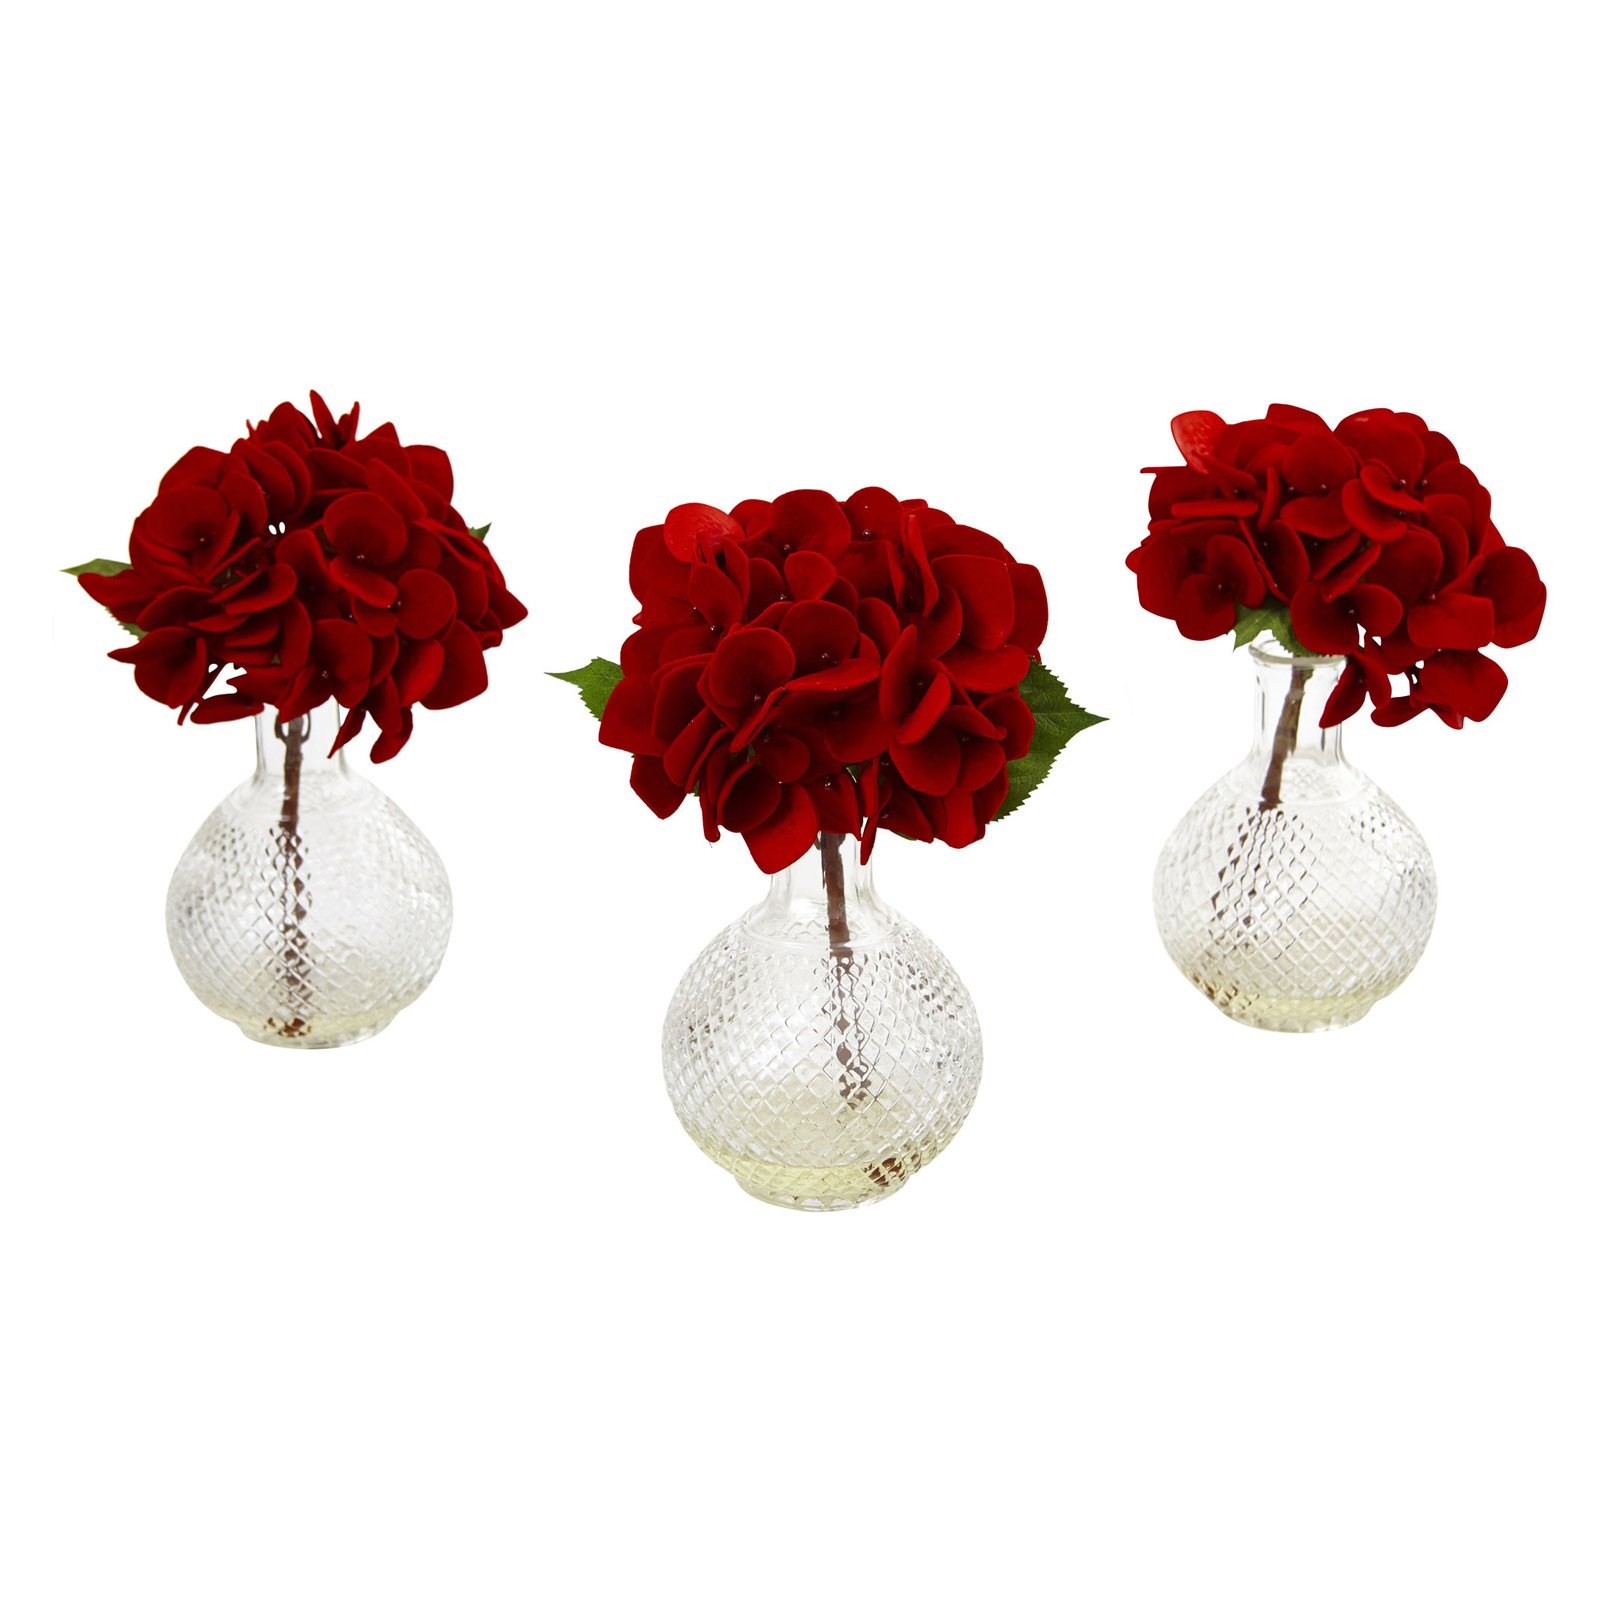 Rose Bush Silk Flower Arrangement with Vase, Red - Walmart.com